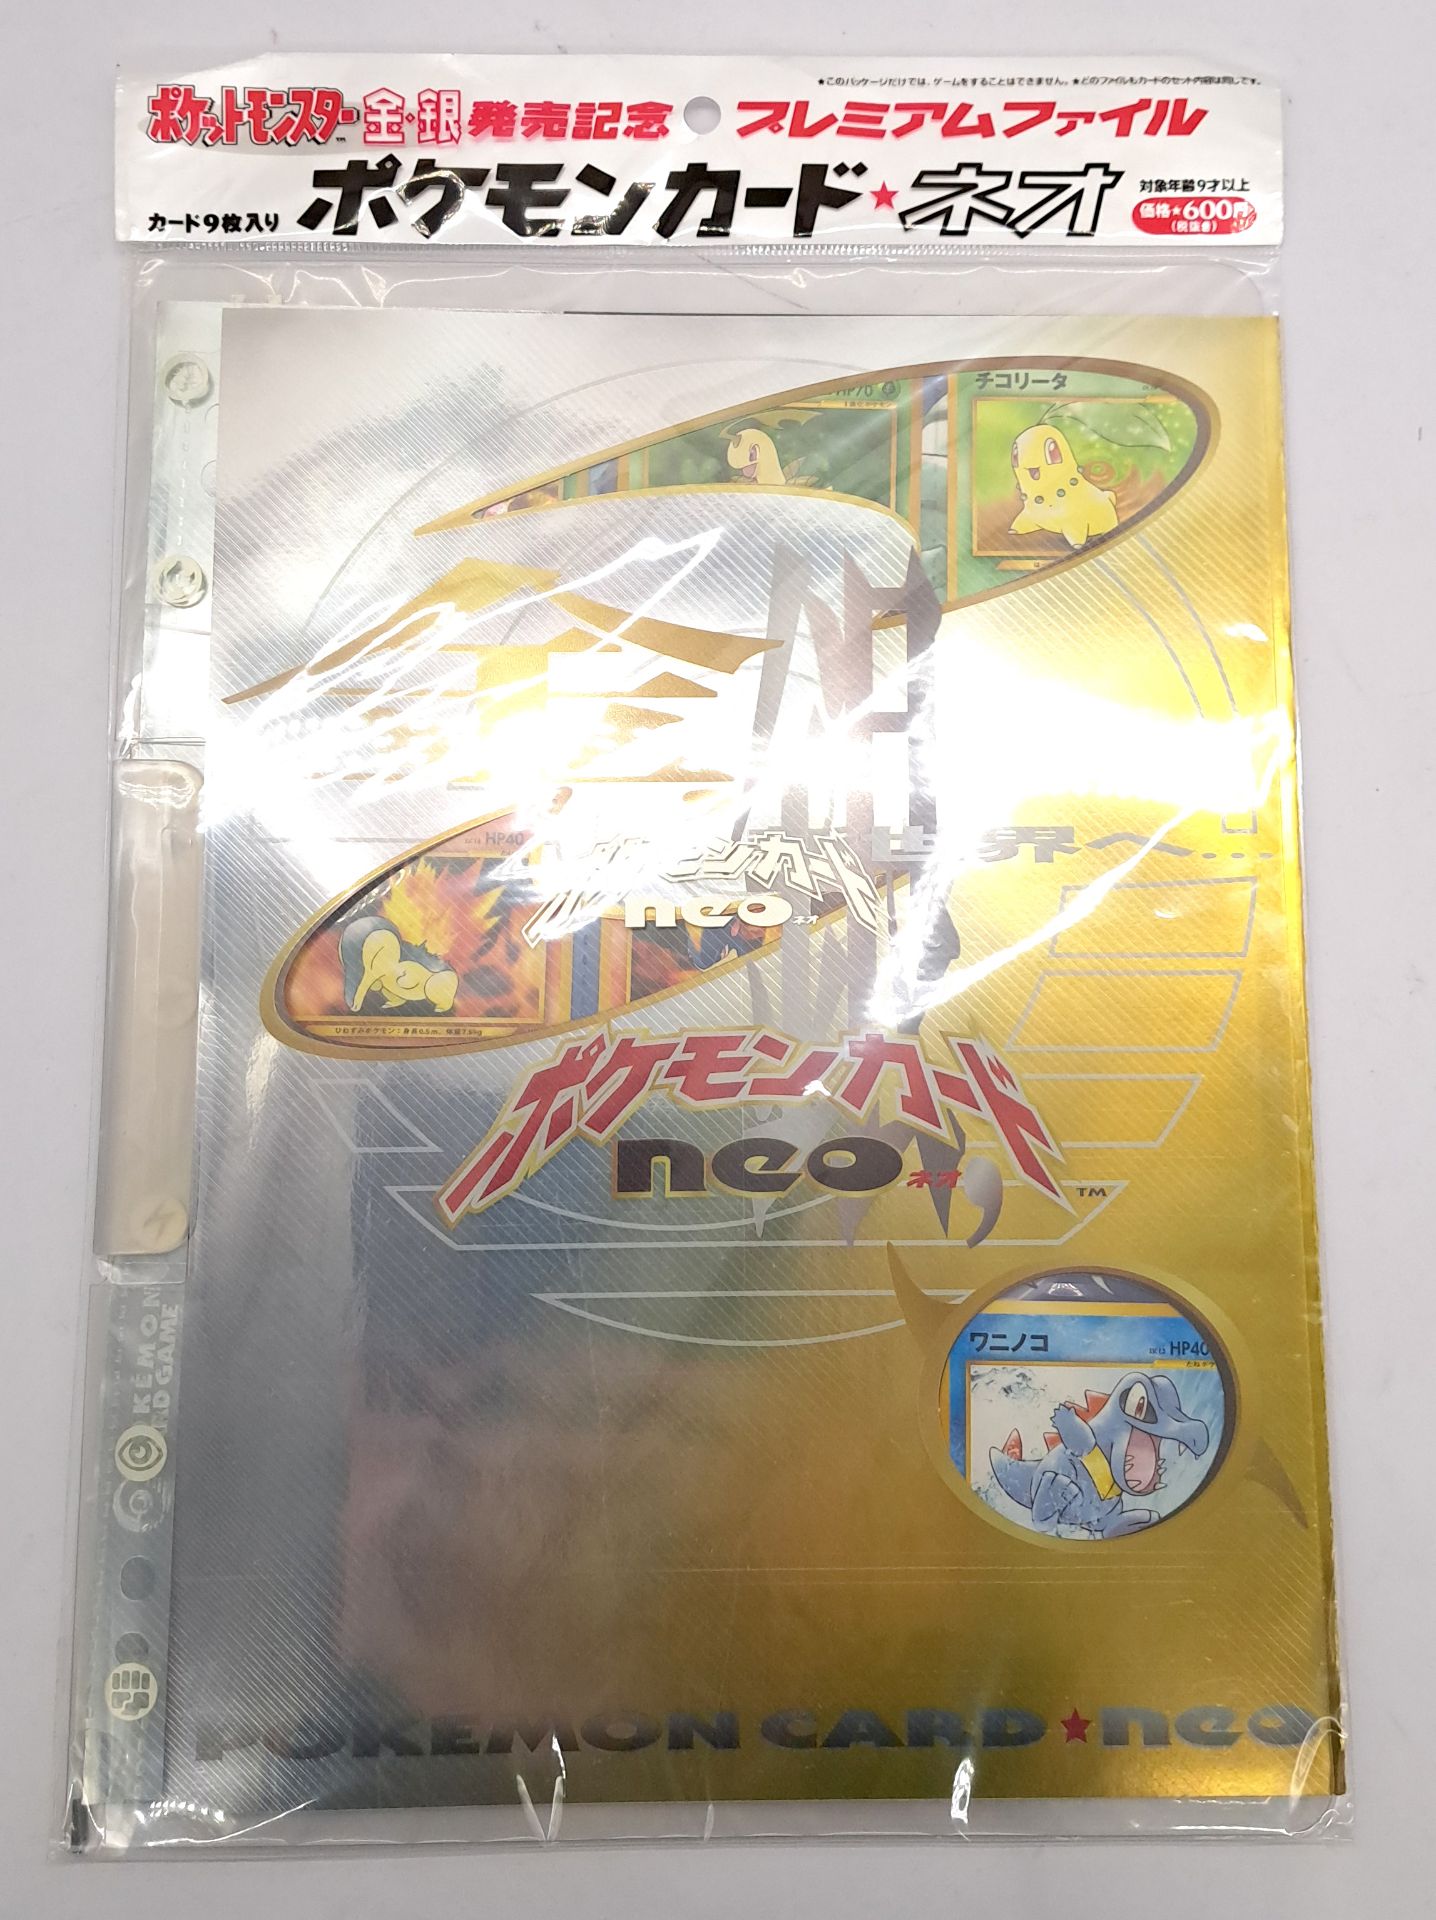 Japanese Pokemon Card Neo Gold and Silver Release Commemorative Premium file folder